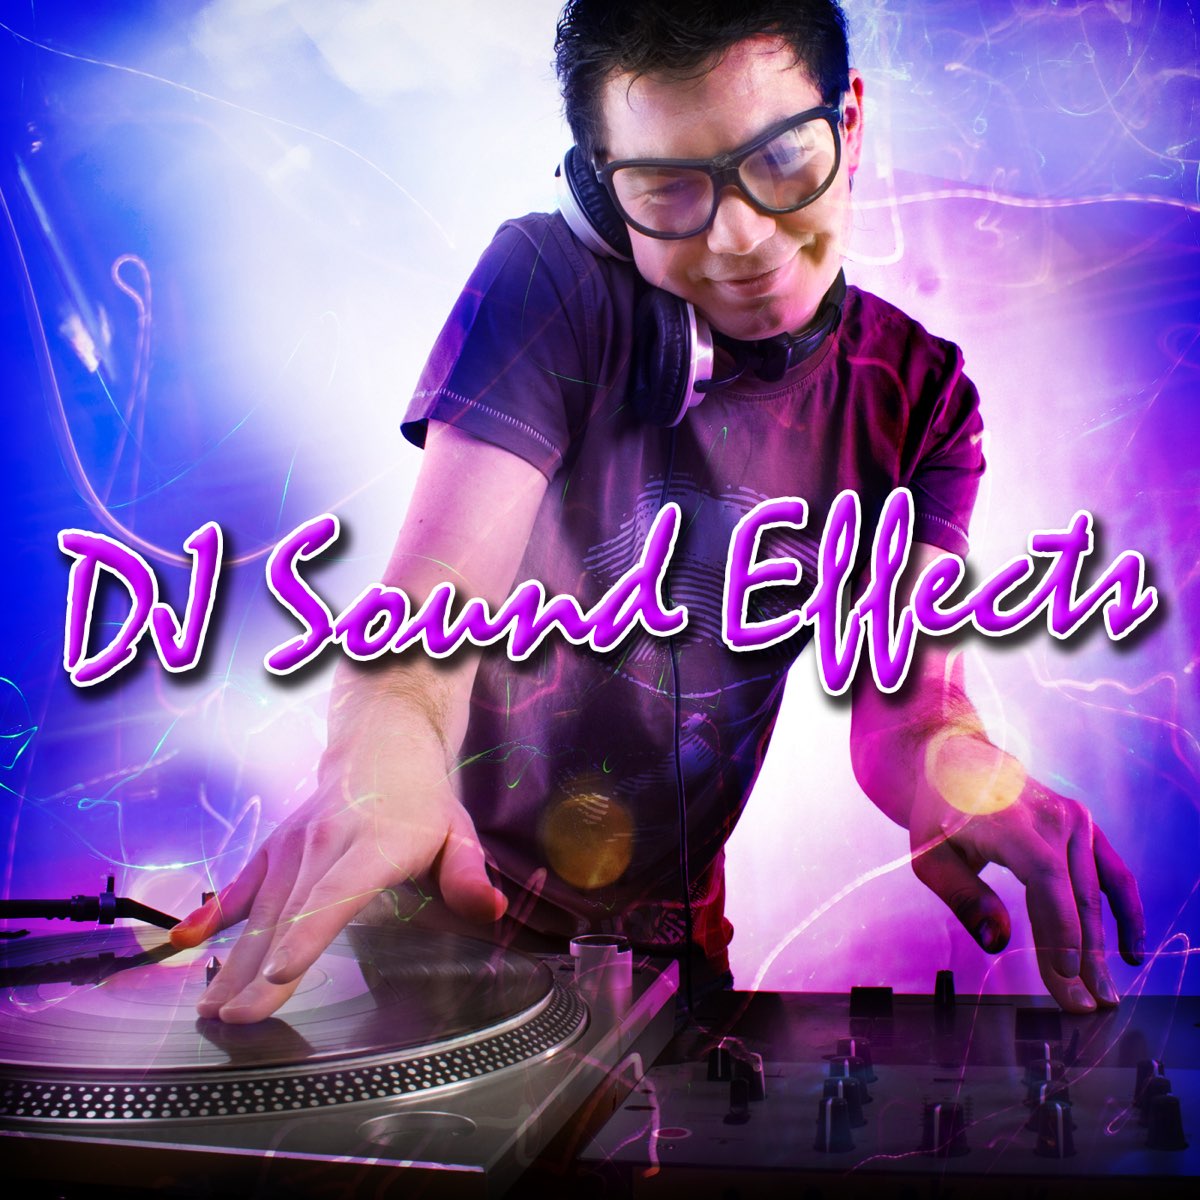 Dj Sound Effects by Dr. Sound FX on Apple Music